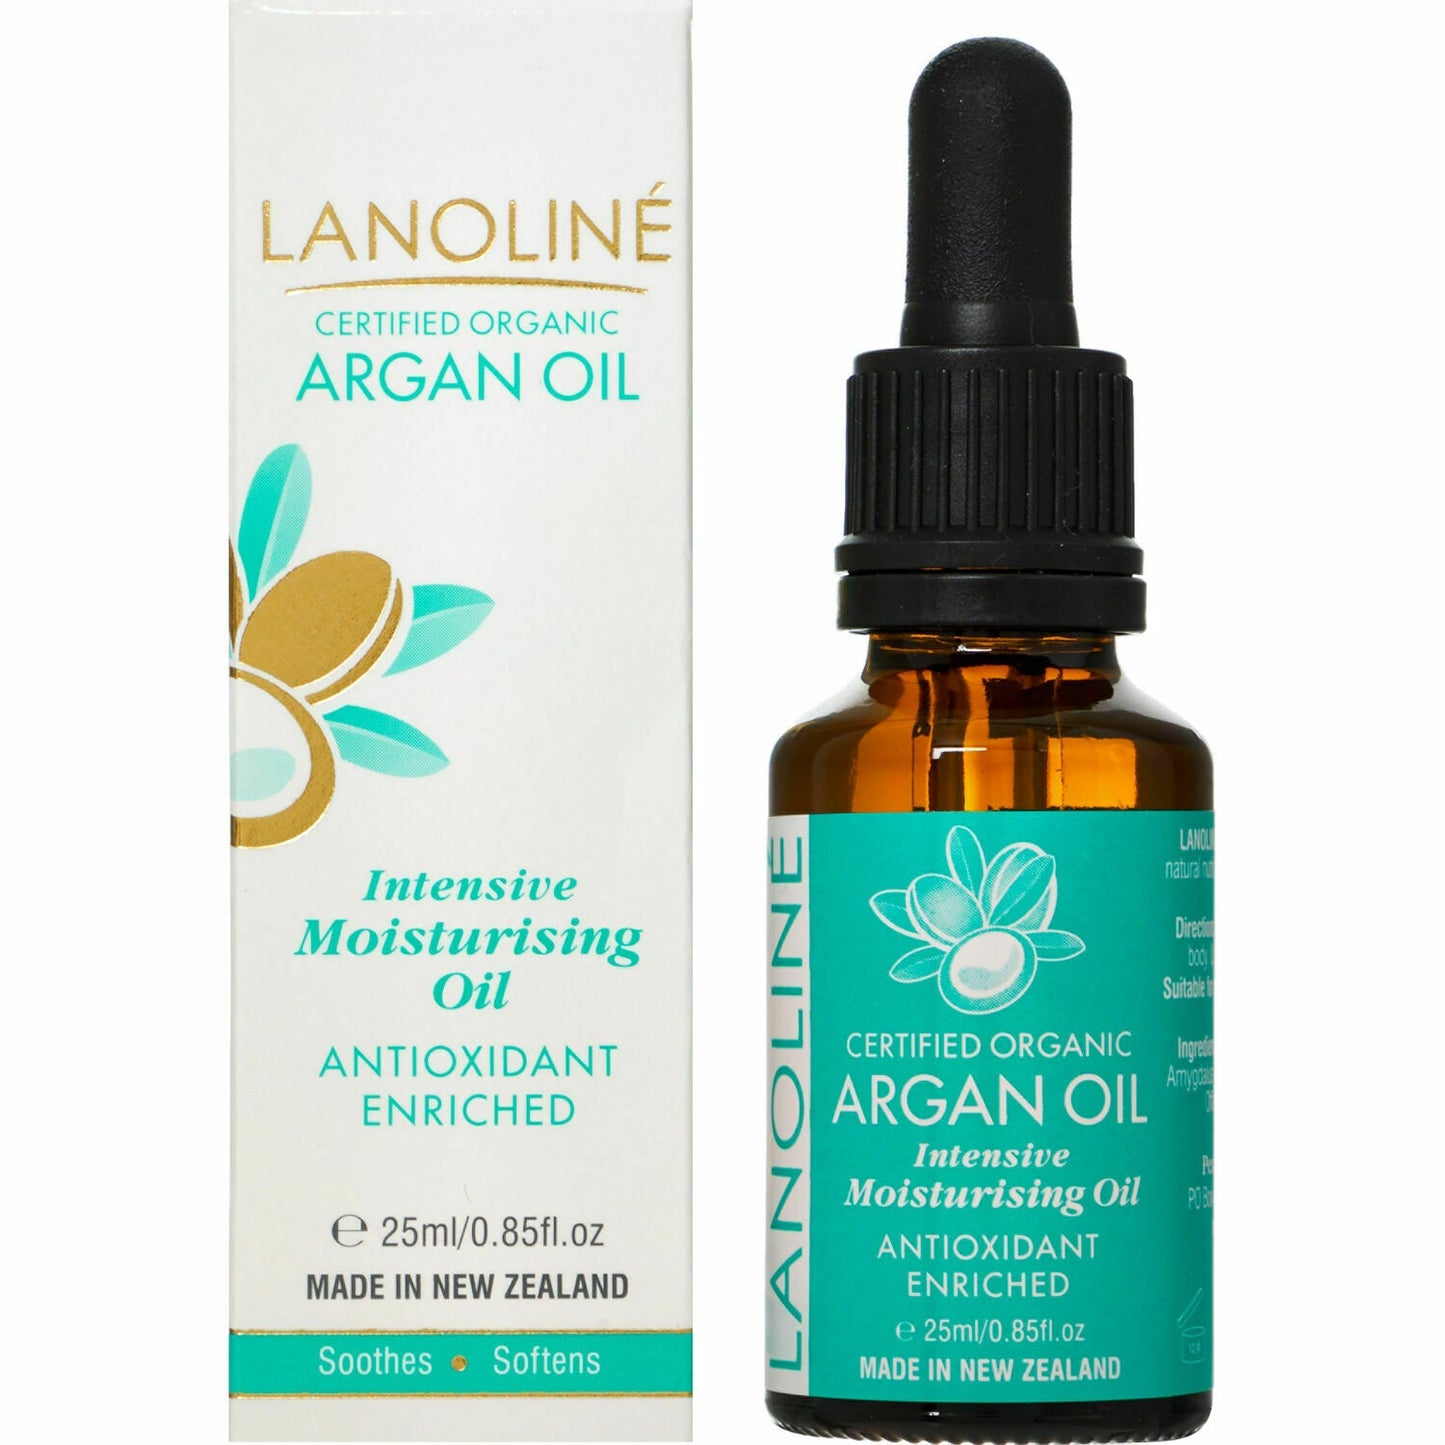 Lanoline Certified Organic Argan Oil Intensive Moisturising Oil Antioxidant Enriched 25ml